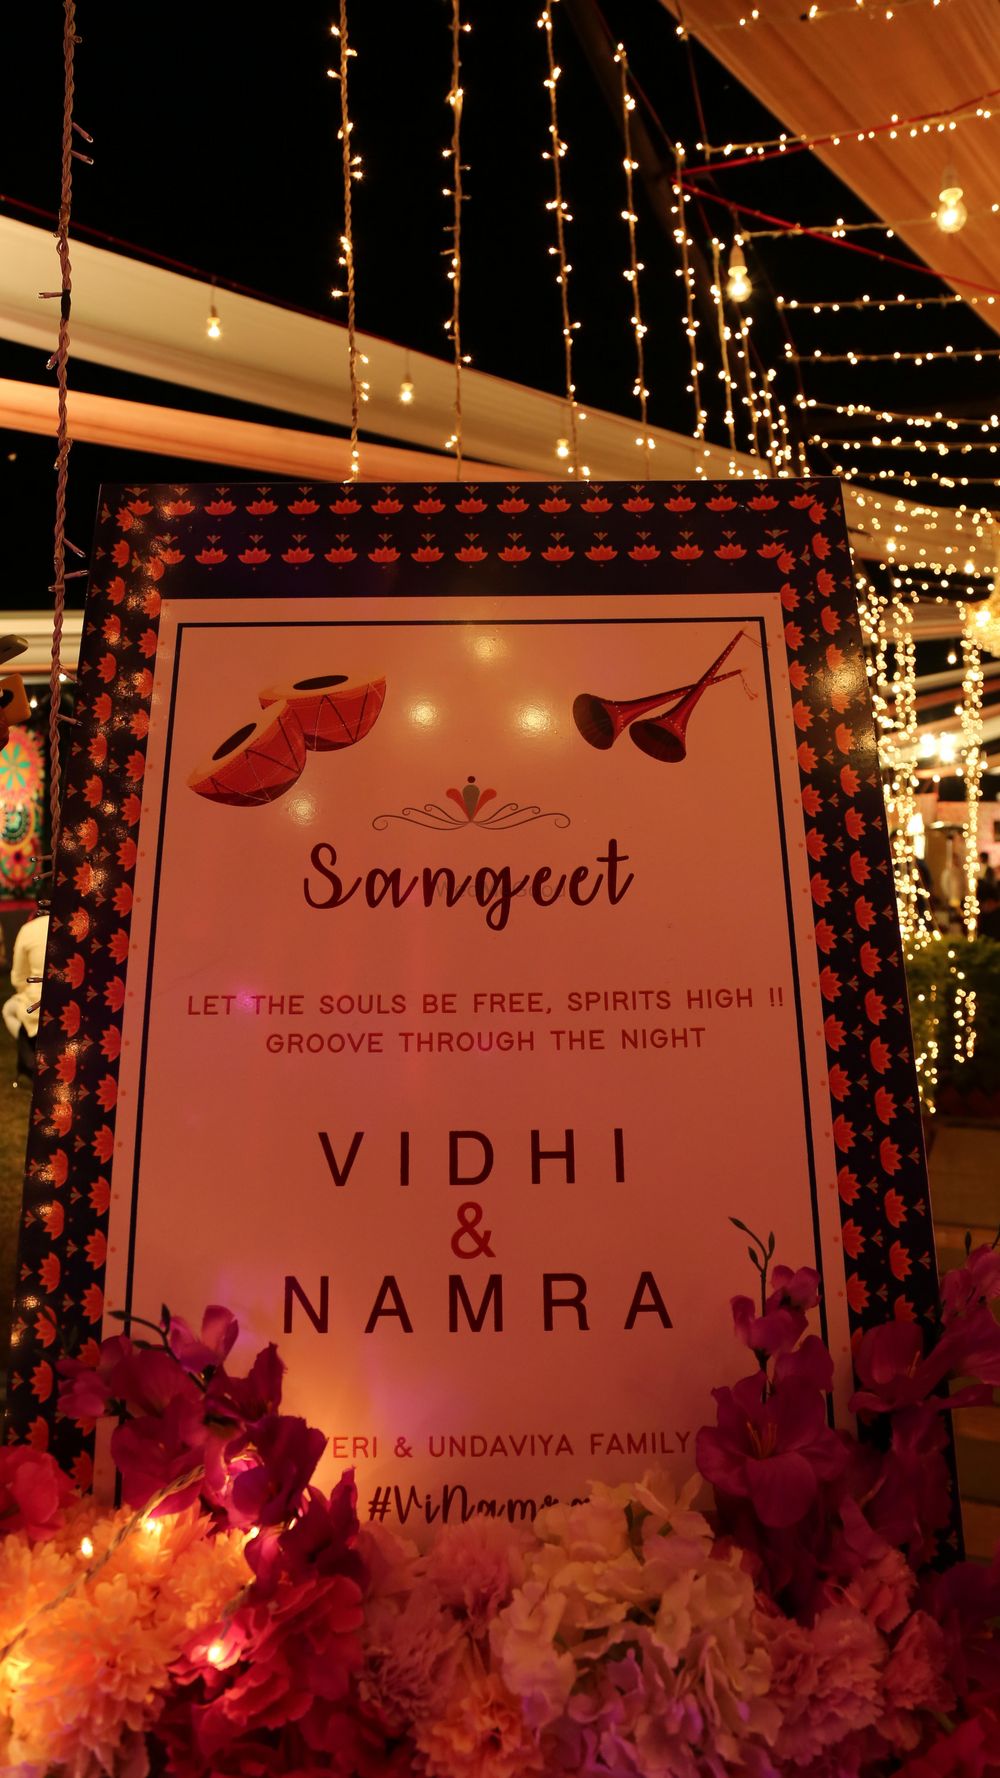 Photo From #ViNamra Viidhi & Namra - By Royall Entertainment